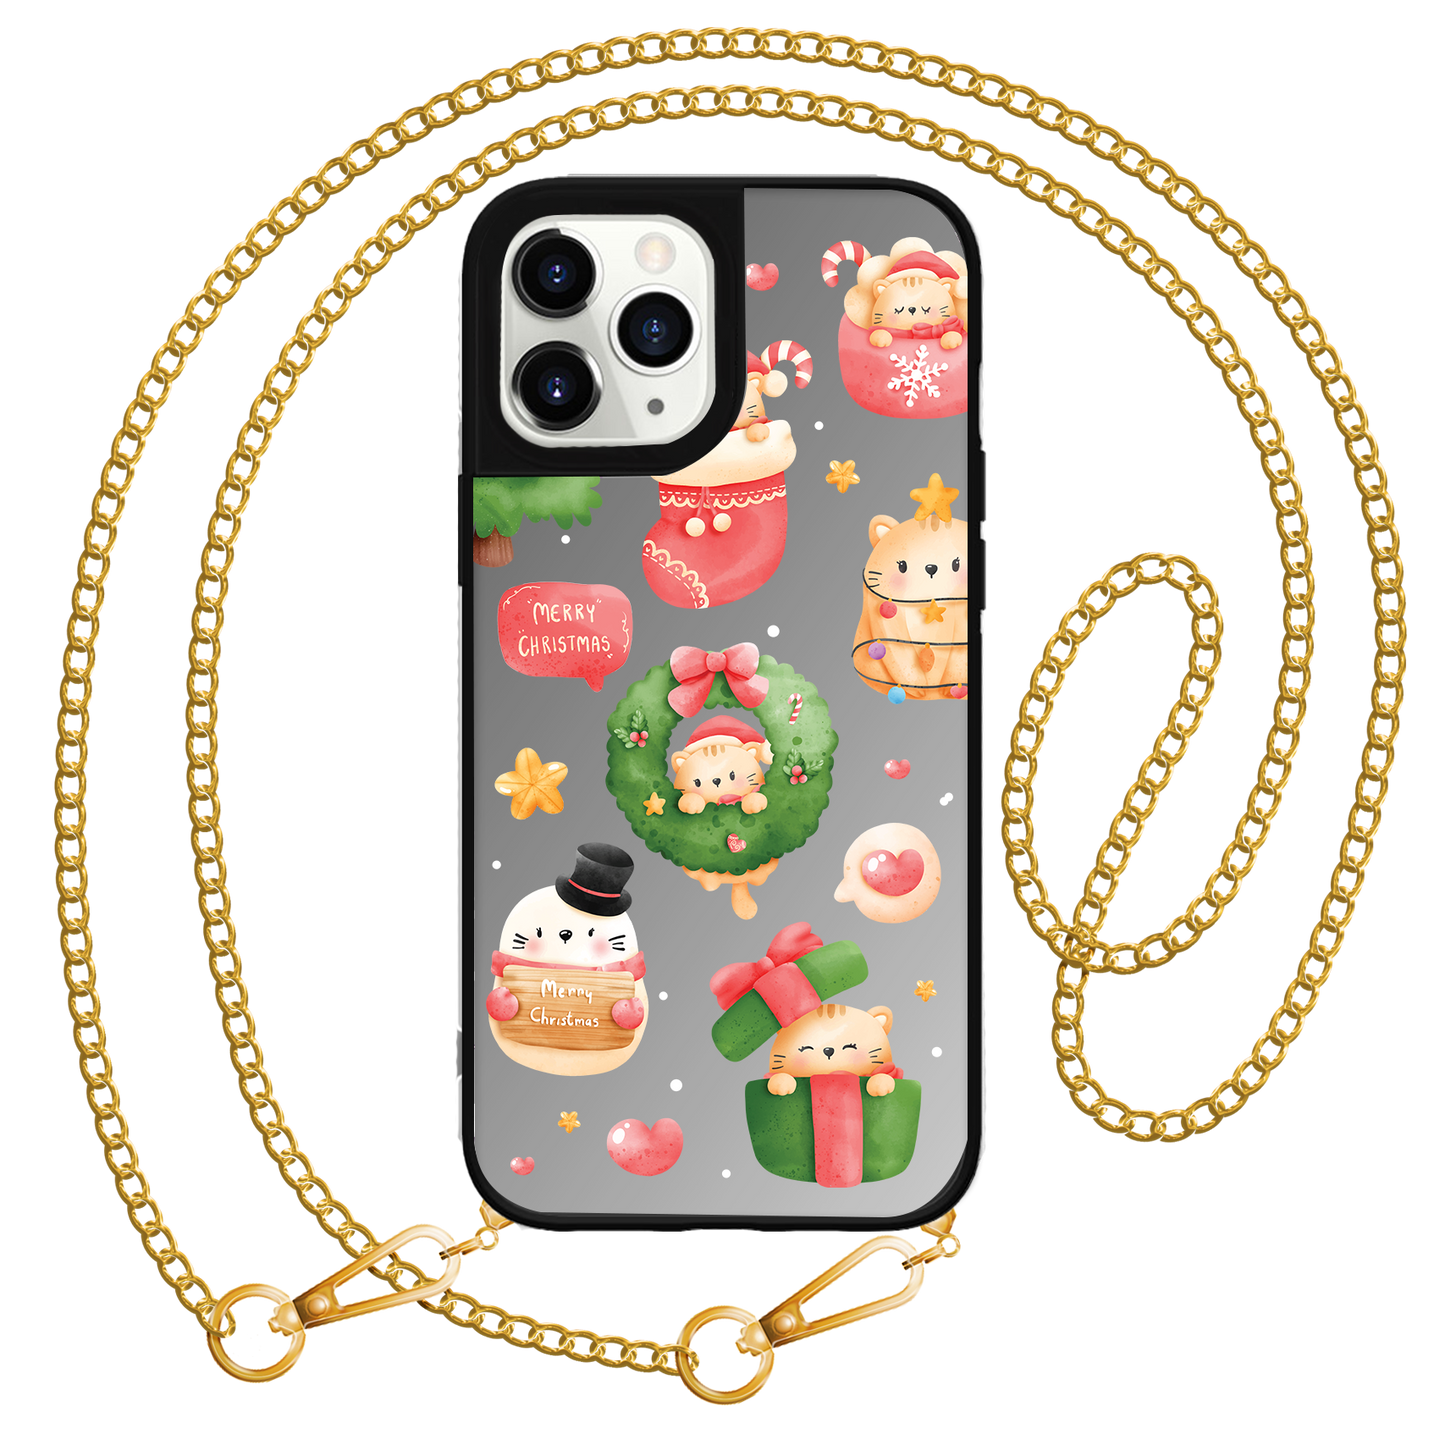 iPhone Mirror Grip Case - Storybook Christmas 1.0